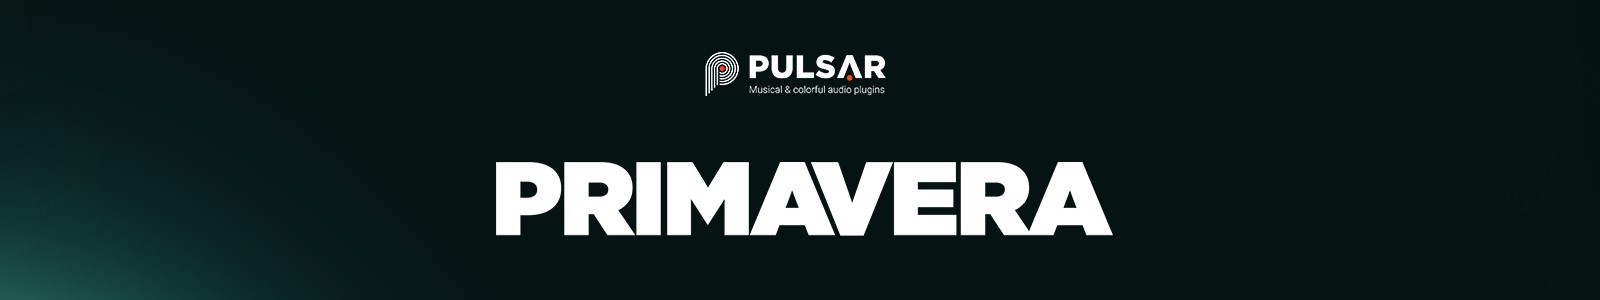 PRIMAVERA String Reverb by Pulsar Audio